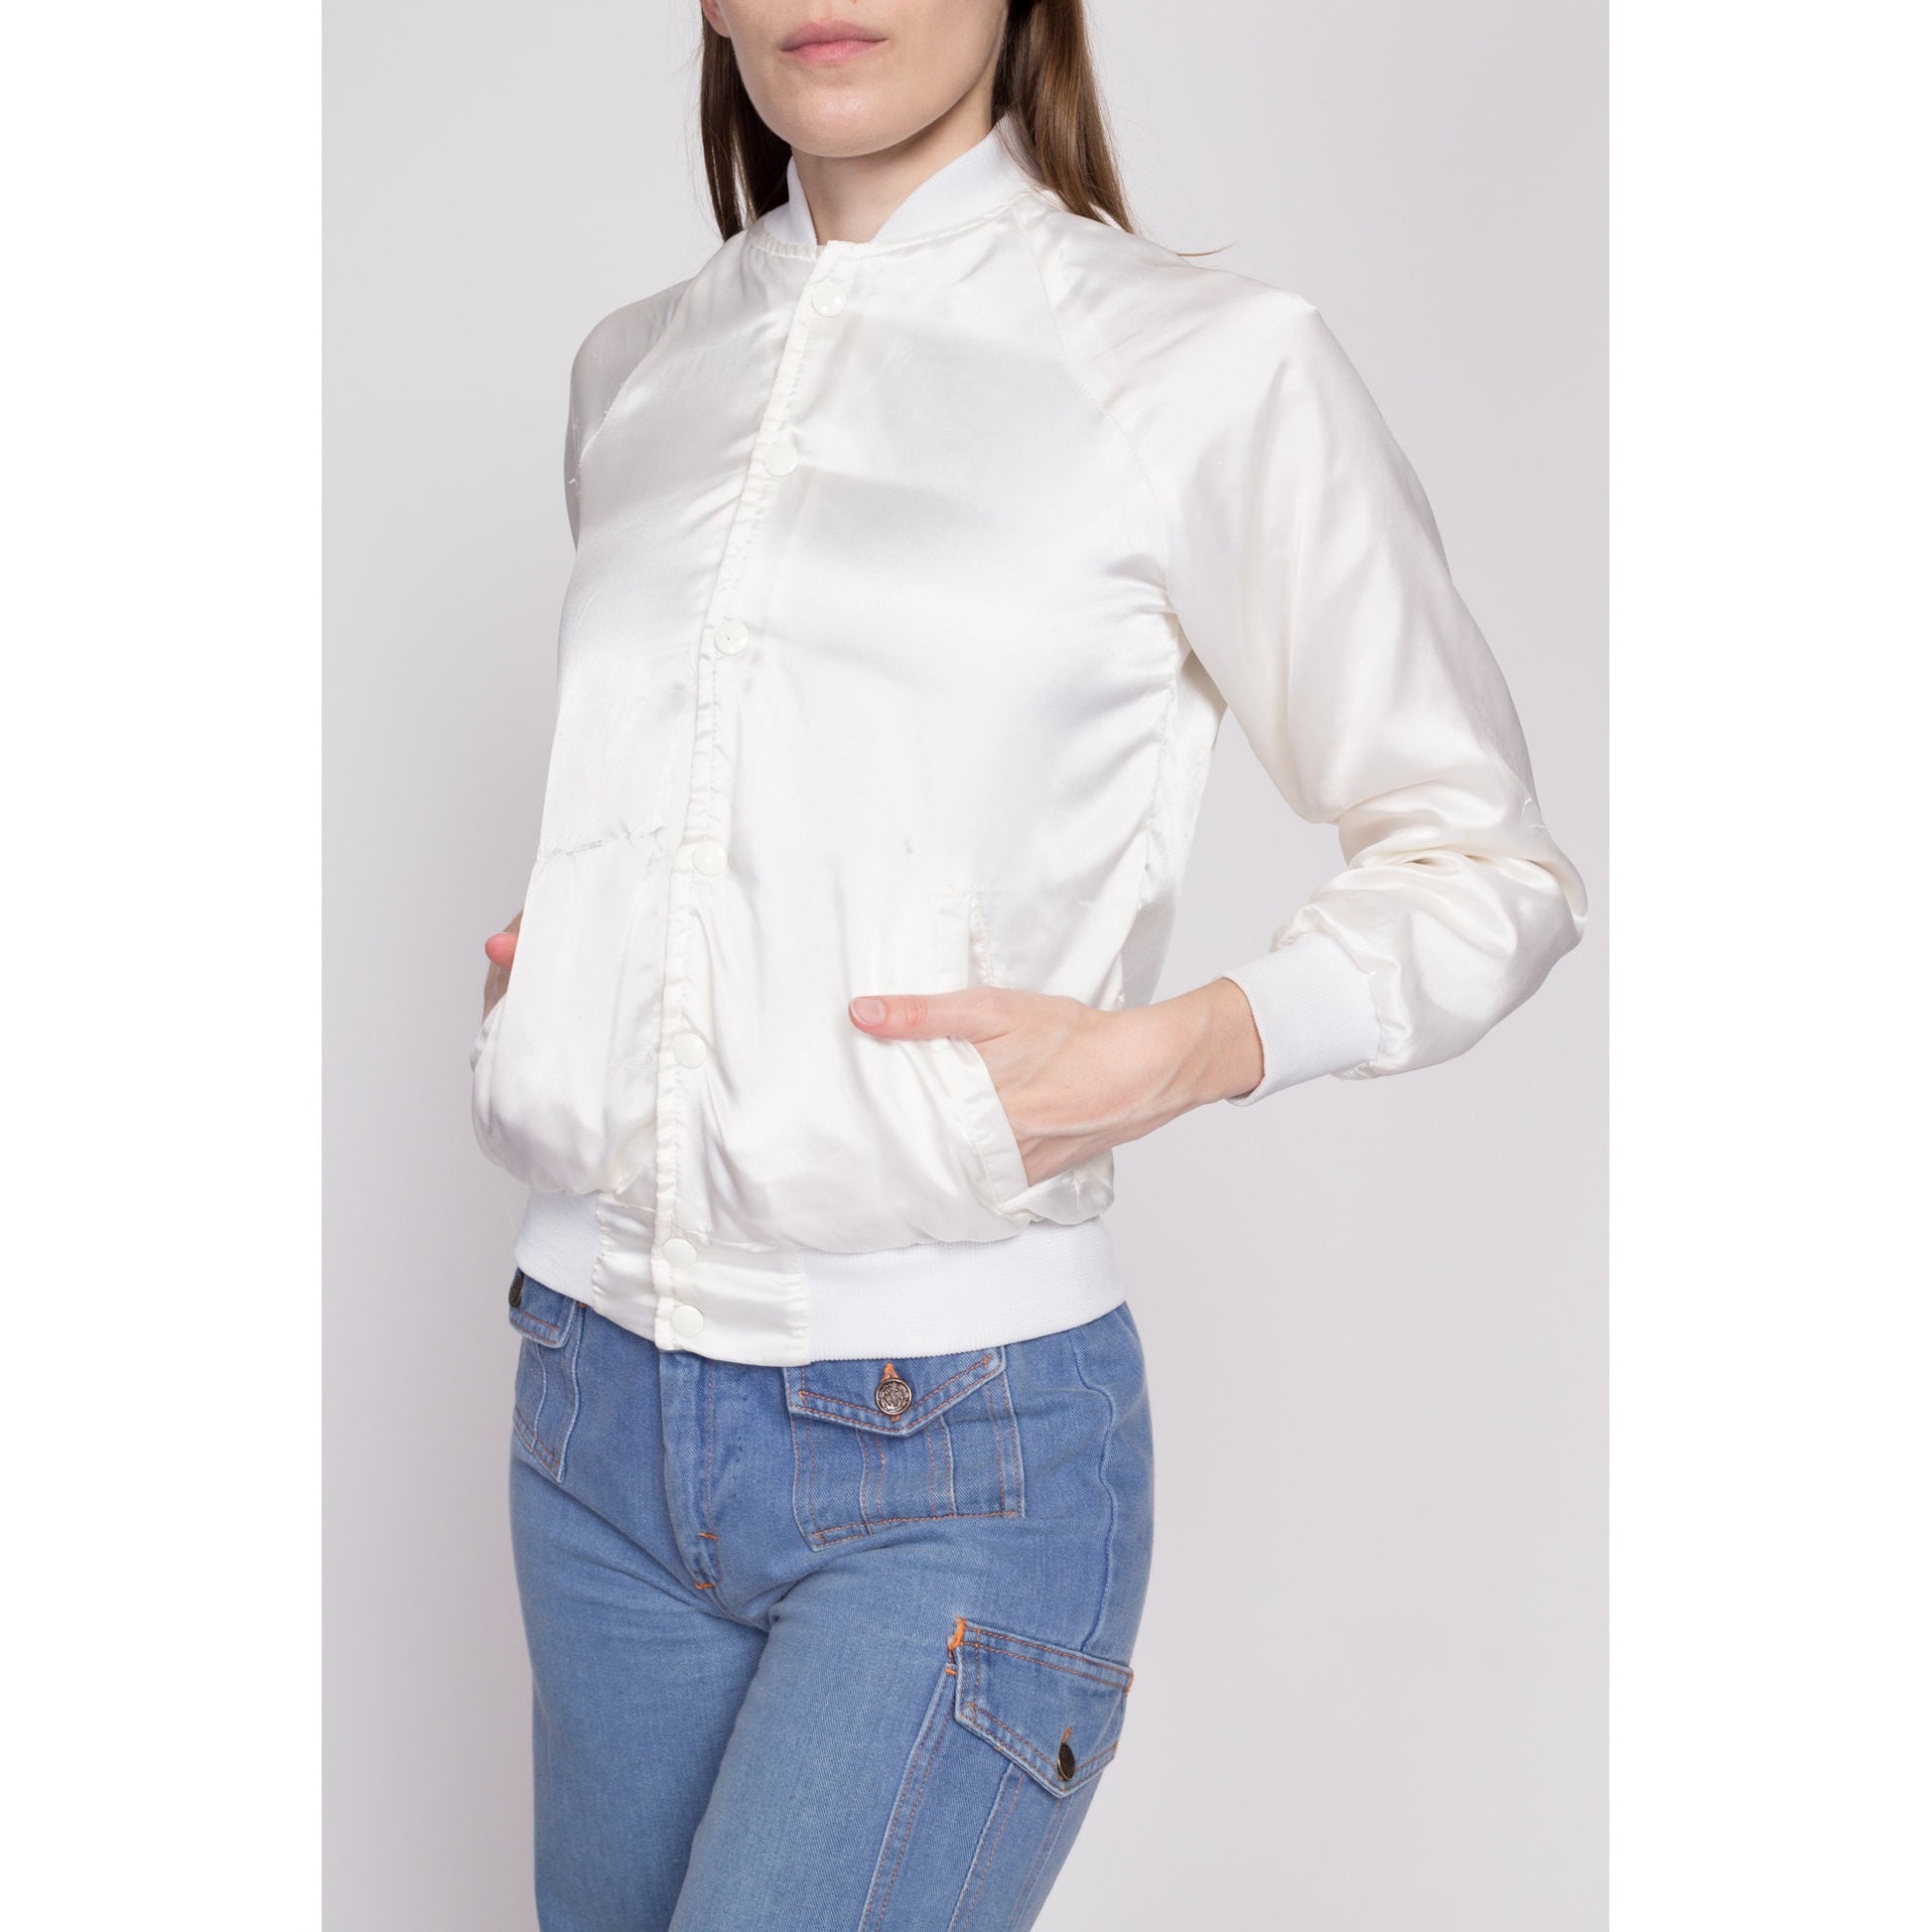 80s The Dance Shoppe Cropped Satin Varsity Jacket - Petite XS | Vintage White Snap Button Windbreaker Coat